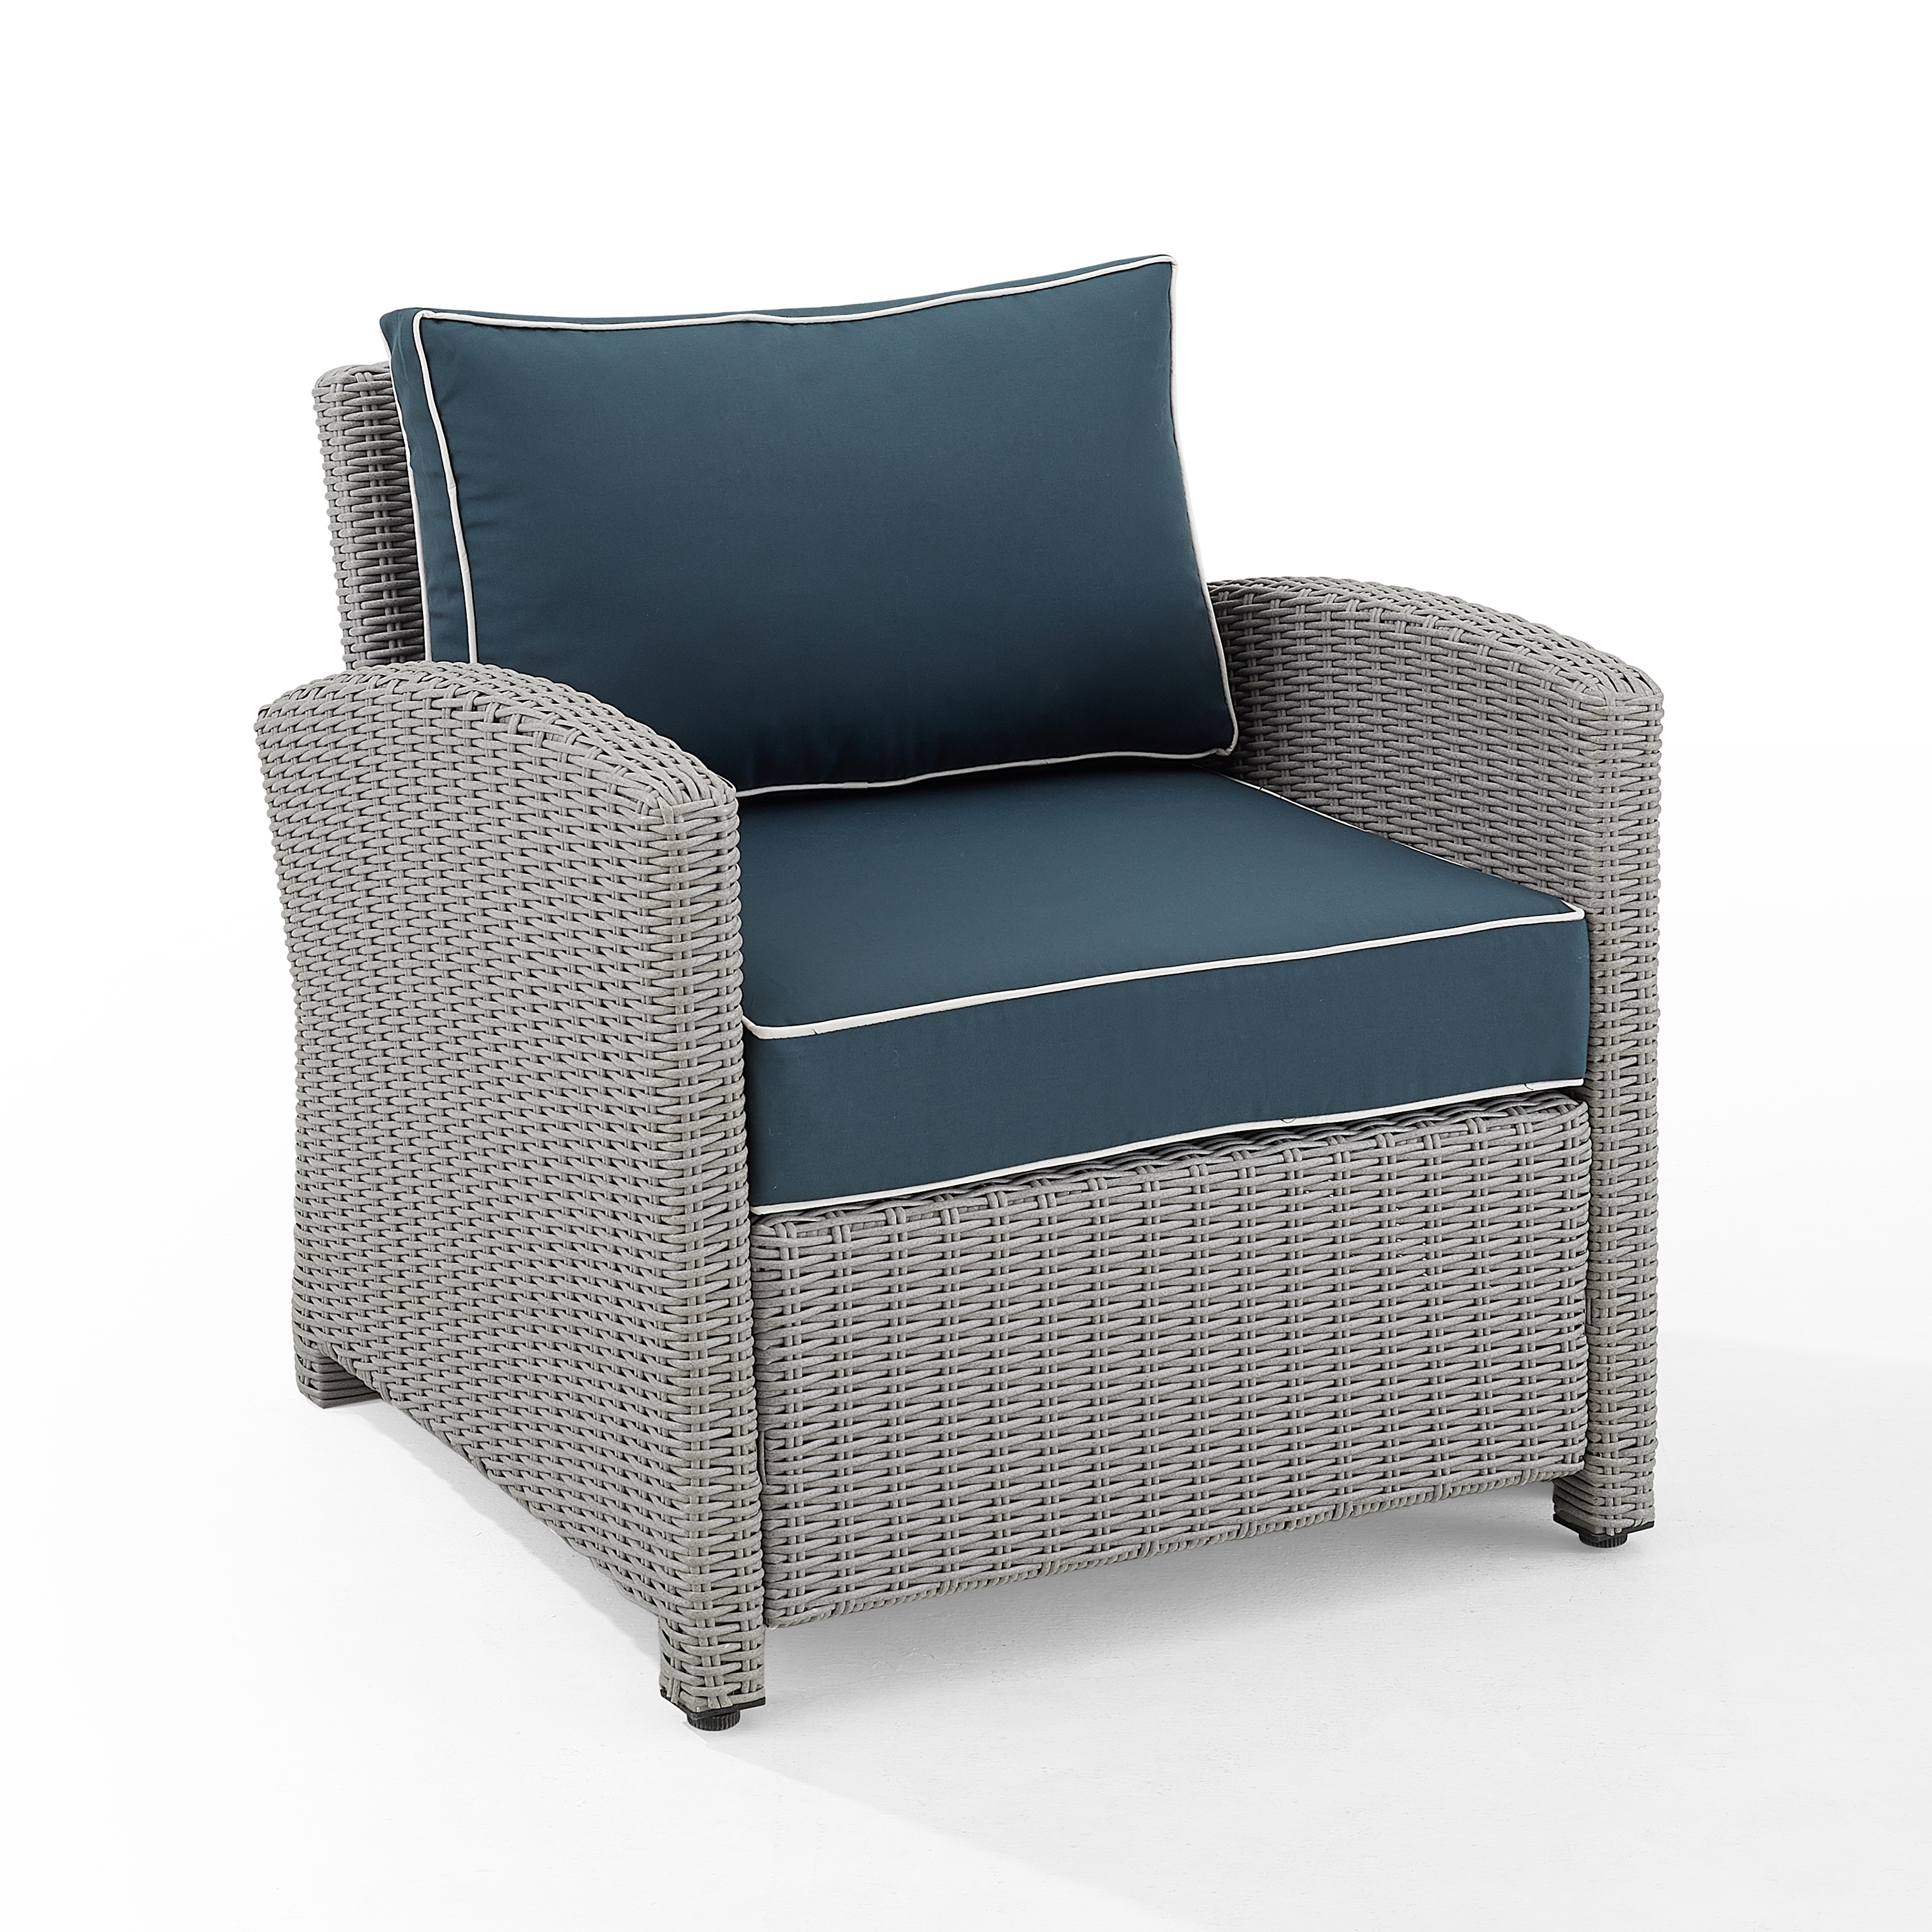 Crosley Furniture Bradenton 18.5" Wicker / Rattan Outdoor Armchair in Navy/Gray - image 1 of 6